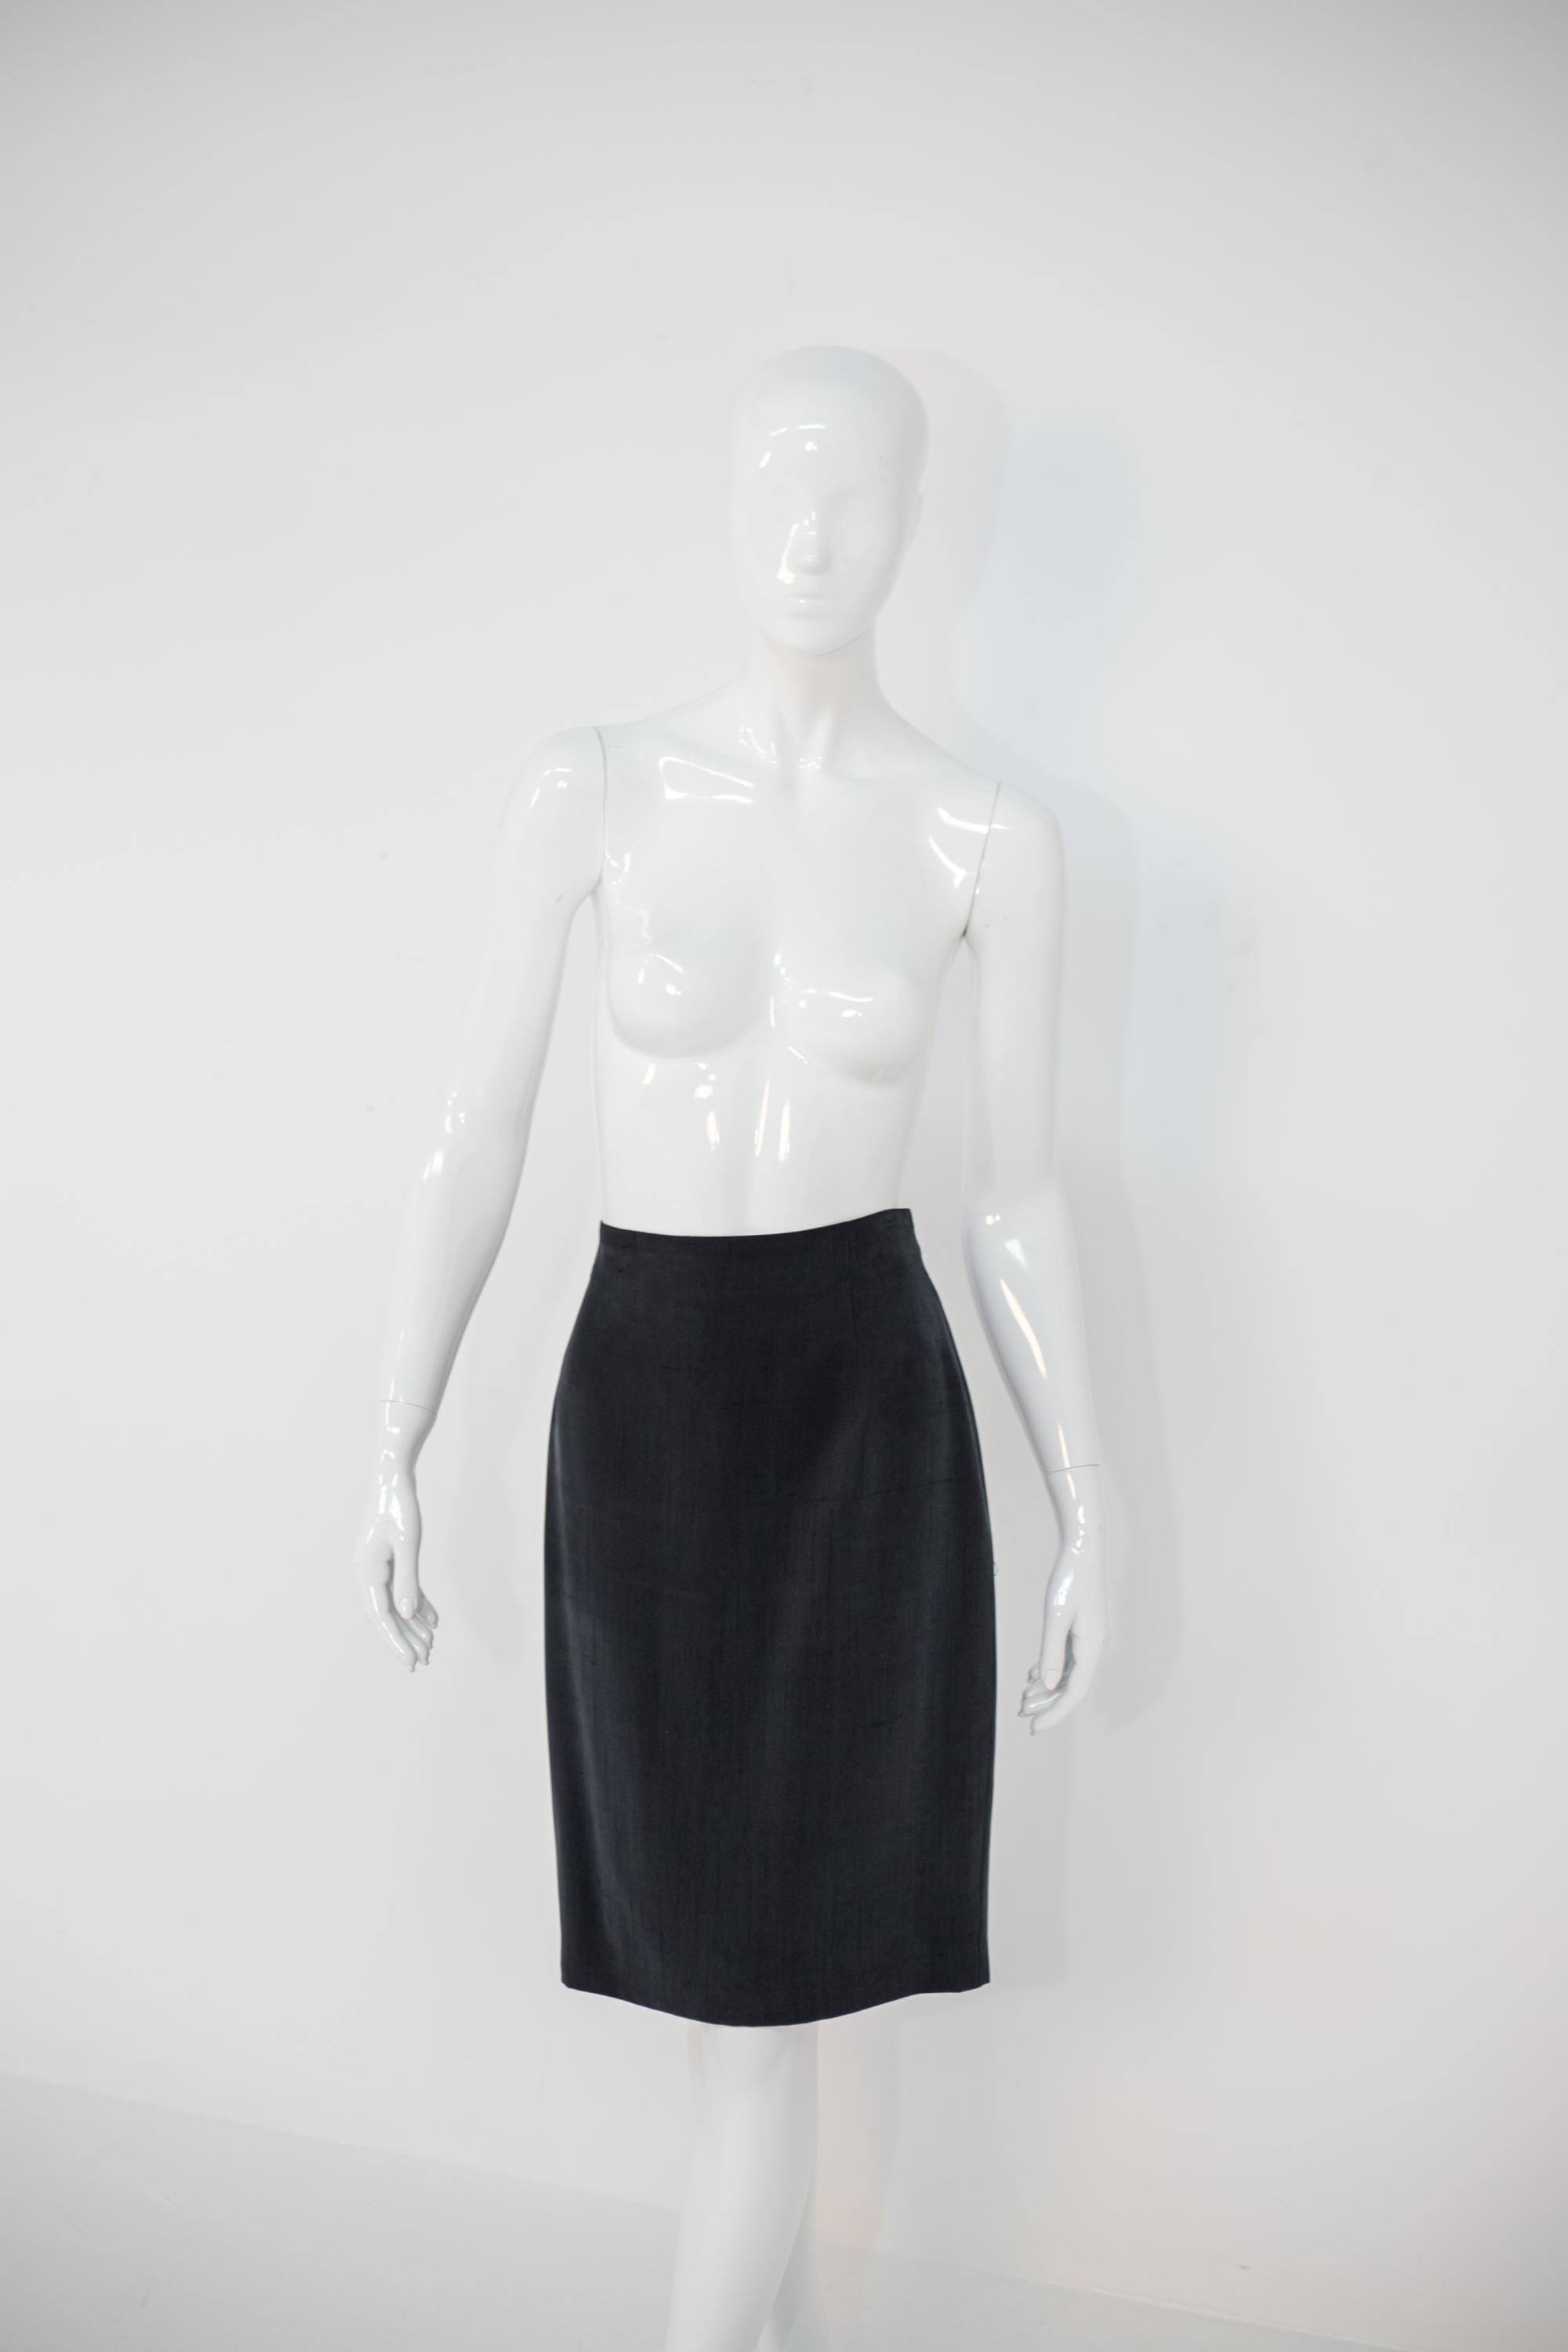 Gianni Versace Black Elegant Skirt Suit For Sale 3